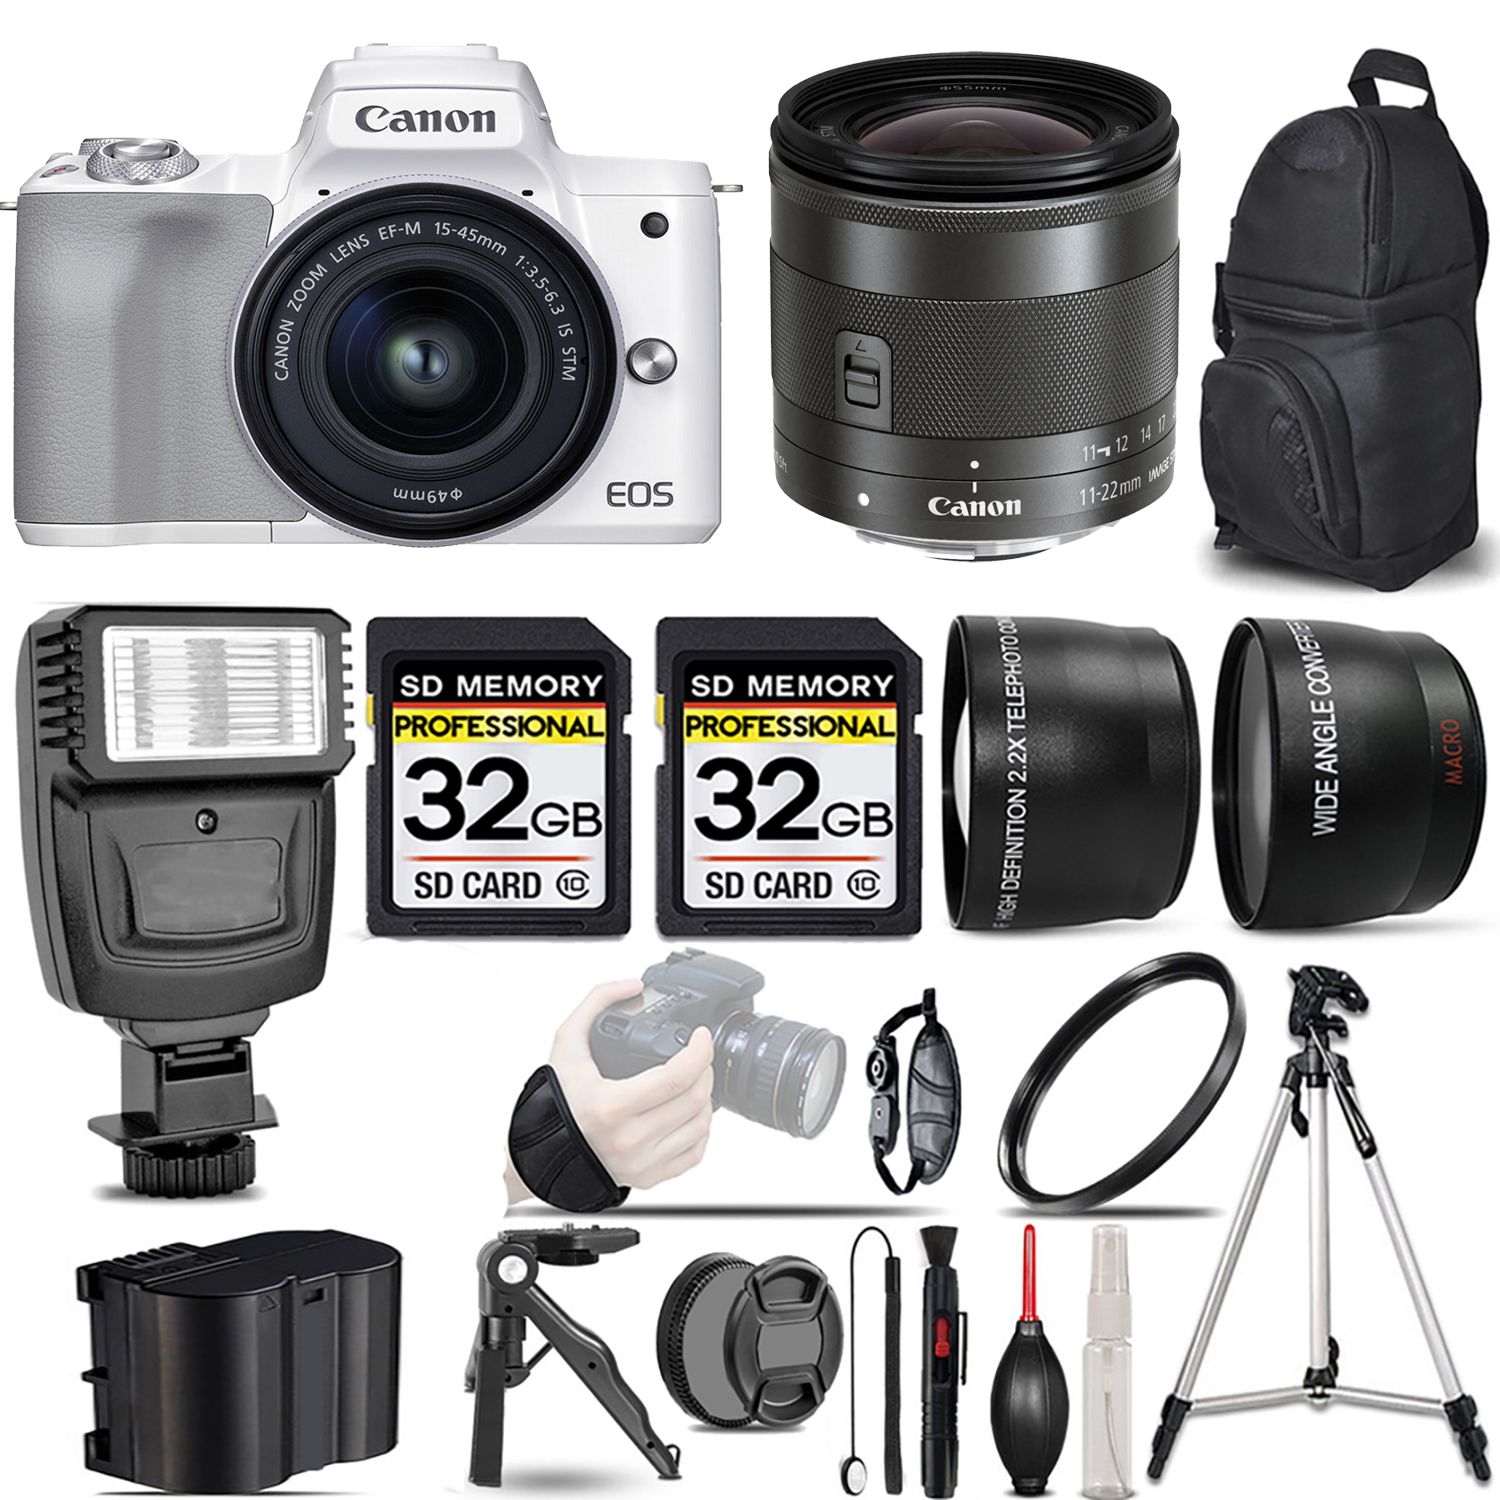 M50 Mark II + 15-45mm Lens (White) + 11-22mm IS STM Lens + Flash + 64GB - Kit *FREE SHIPPING*